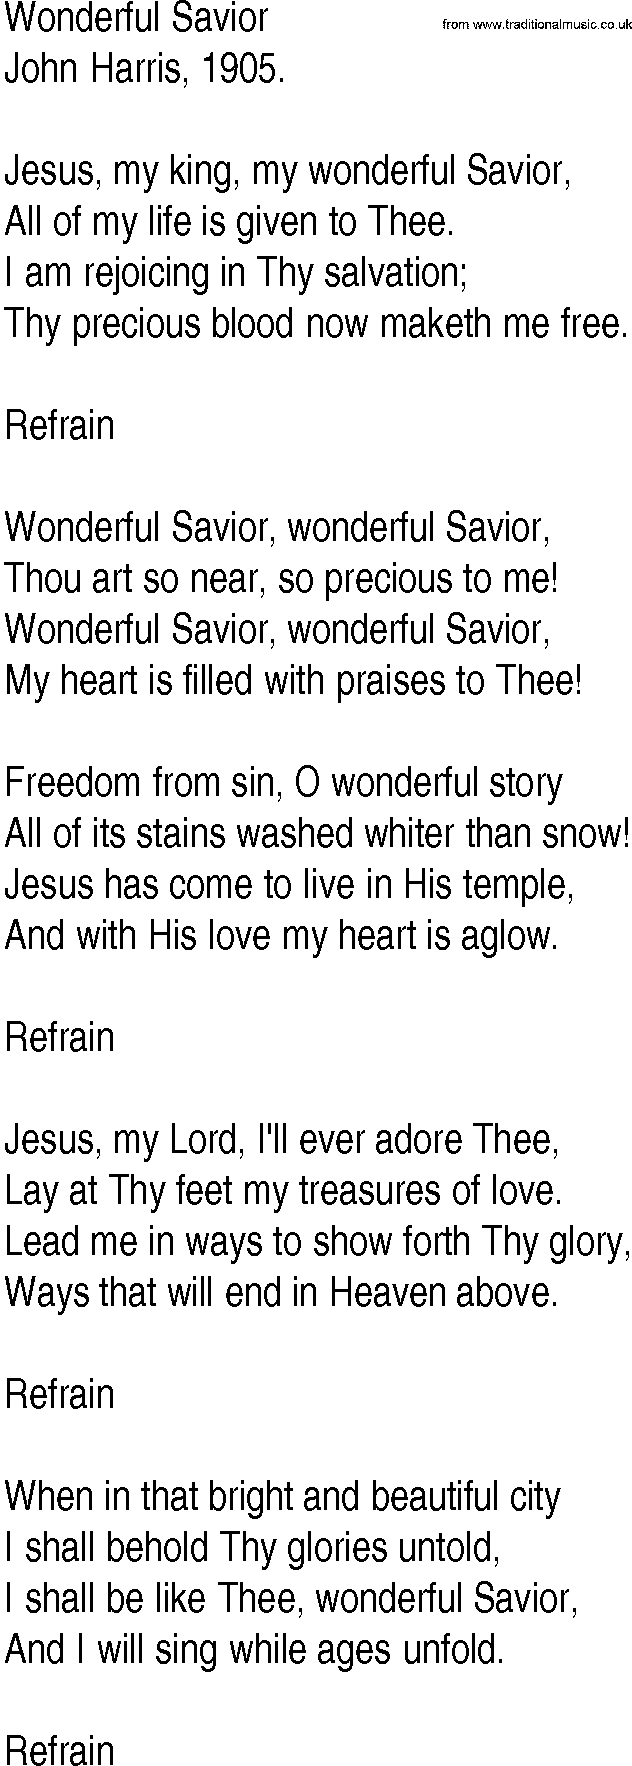 Hymn and Gospel Song: Wonderful Savior by John Harris lyrics